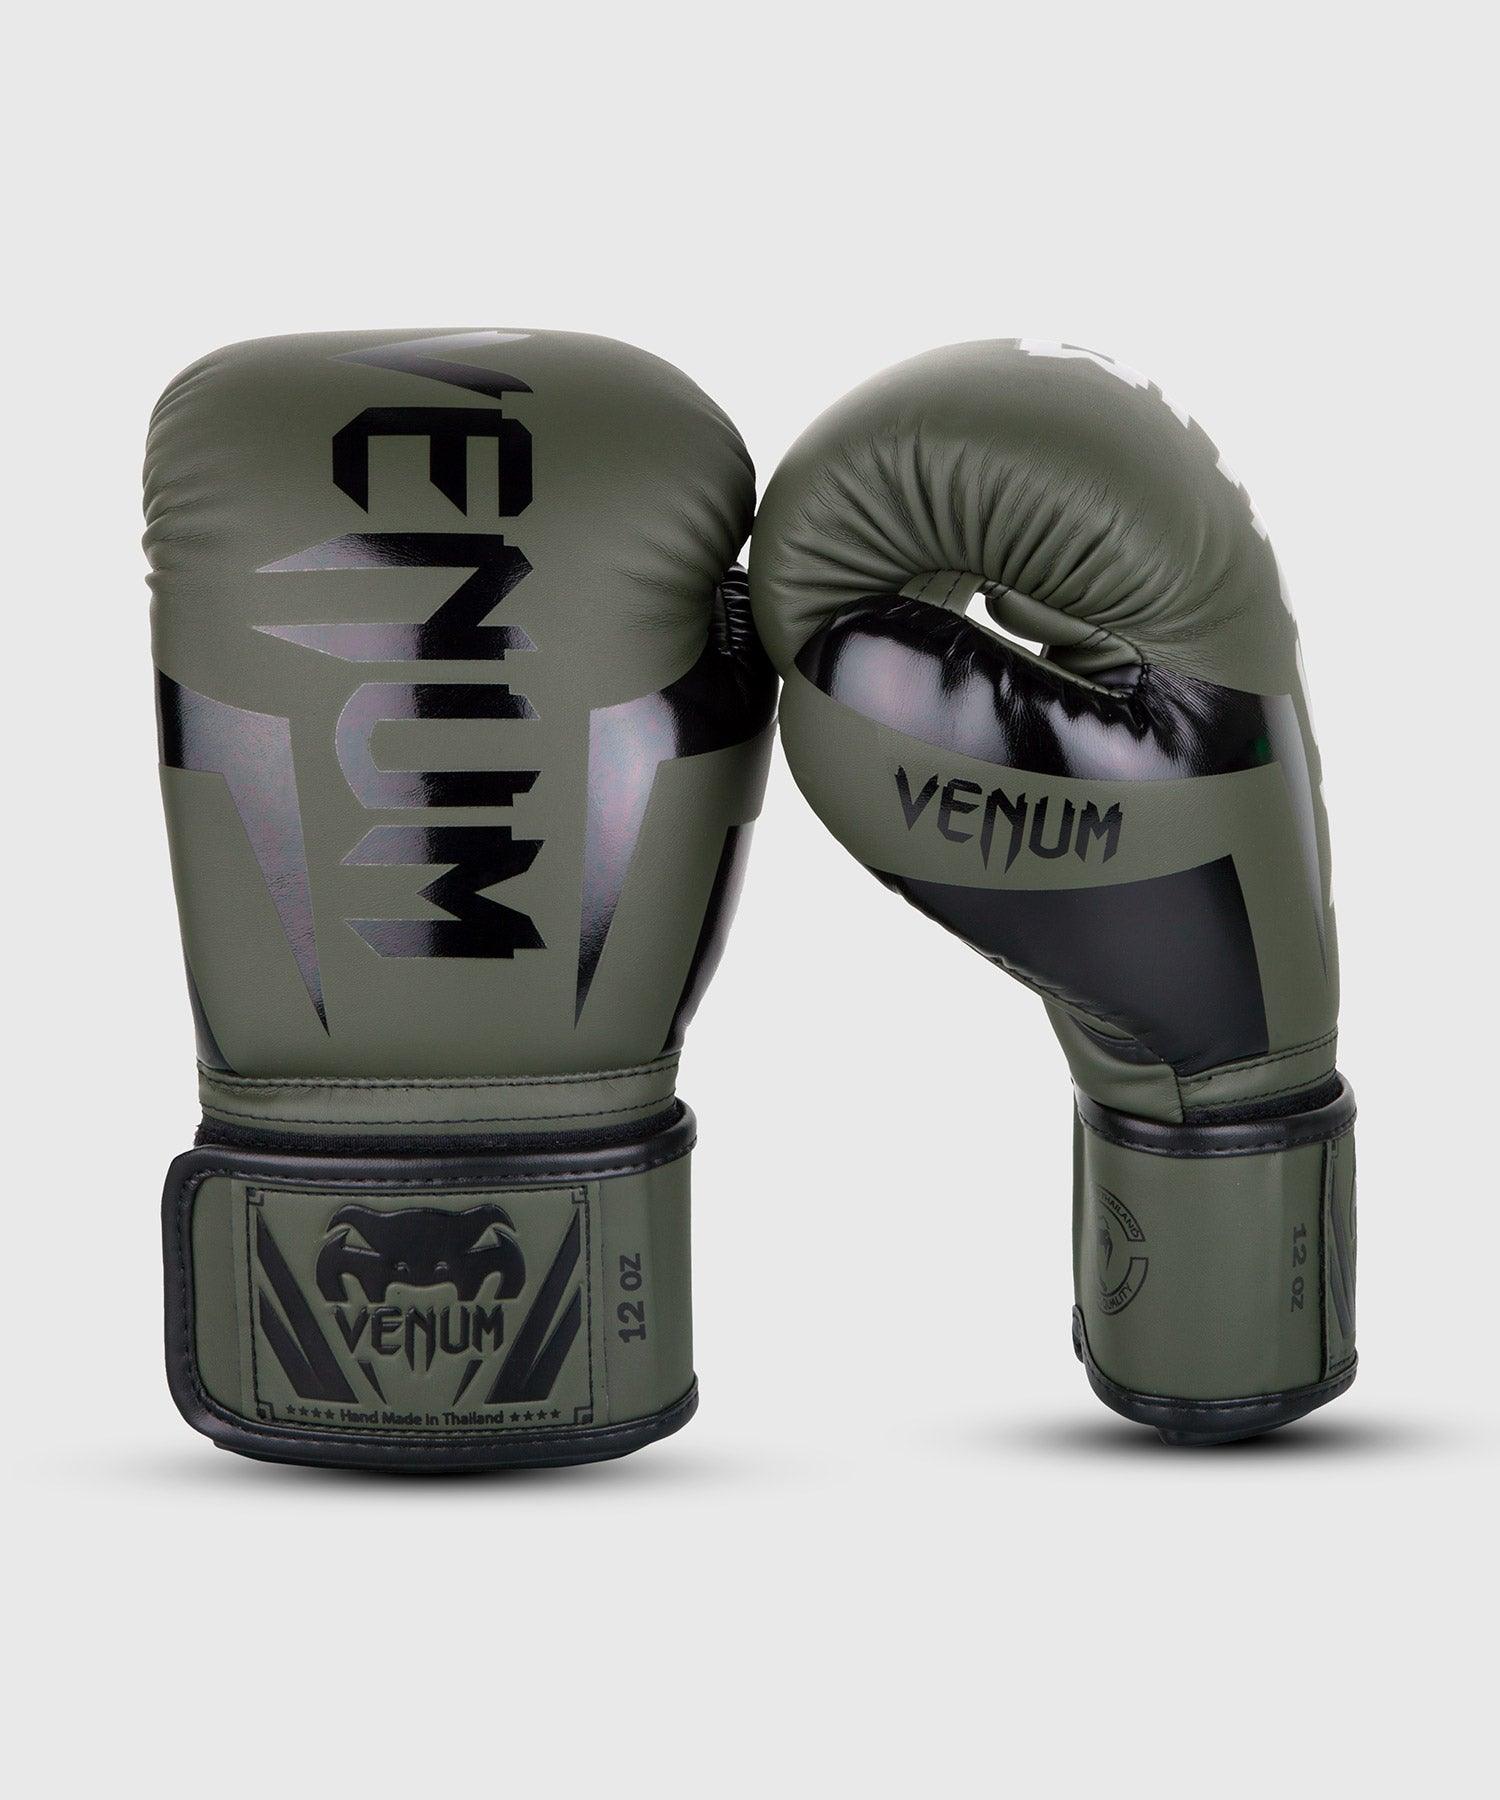 Venum Elite Boxing Gloves - Khaki/Black Picture 1